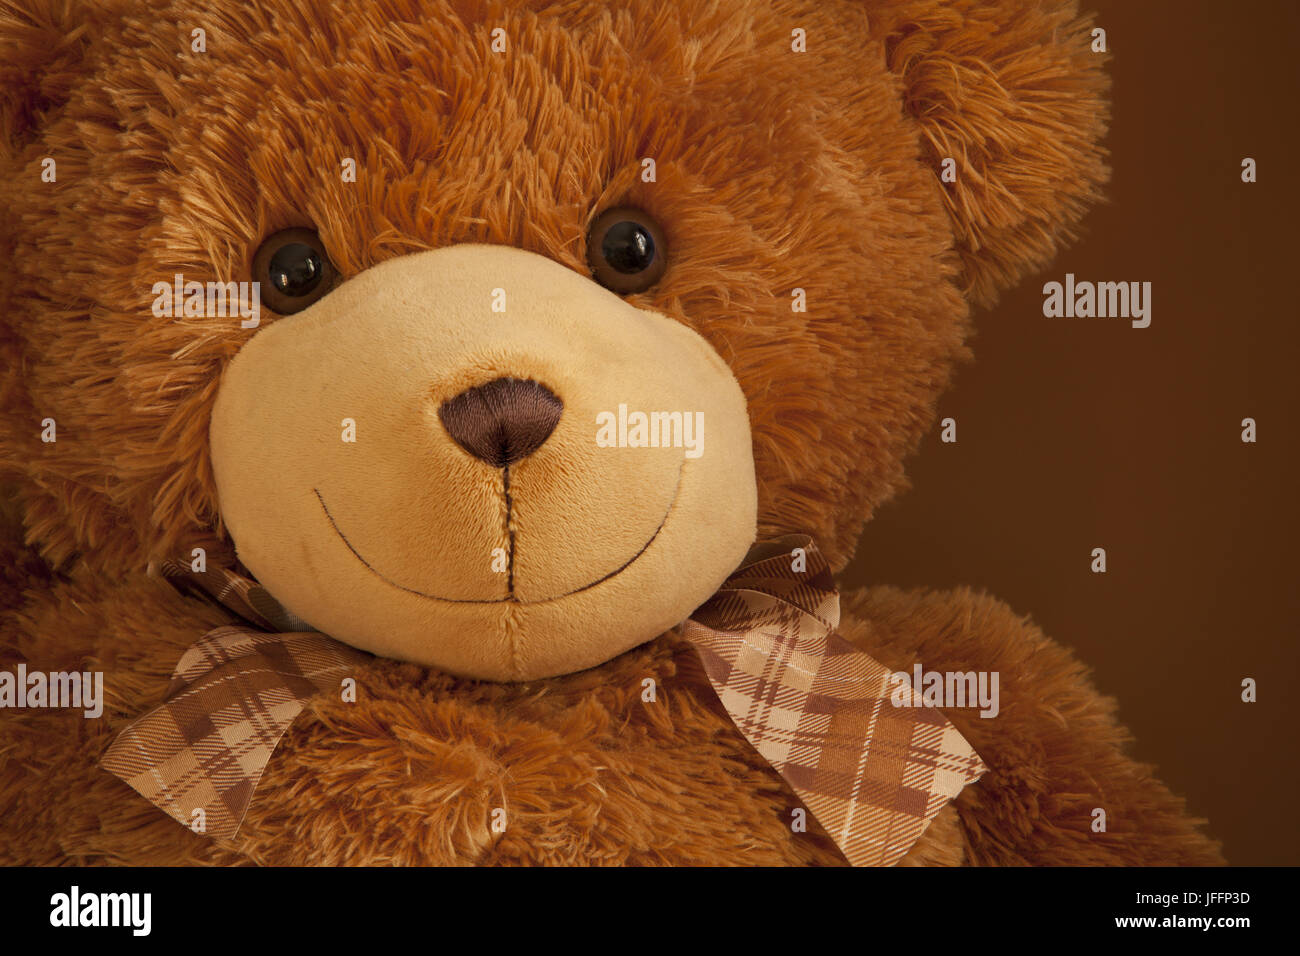 Page 121  Teddy Bear Eyes Images - Free Download on Freepik